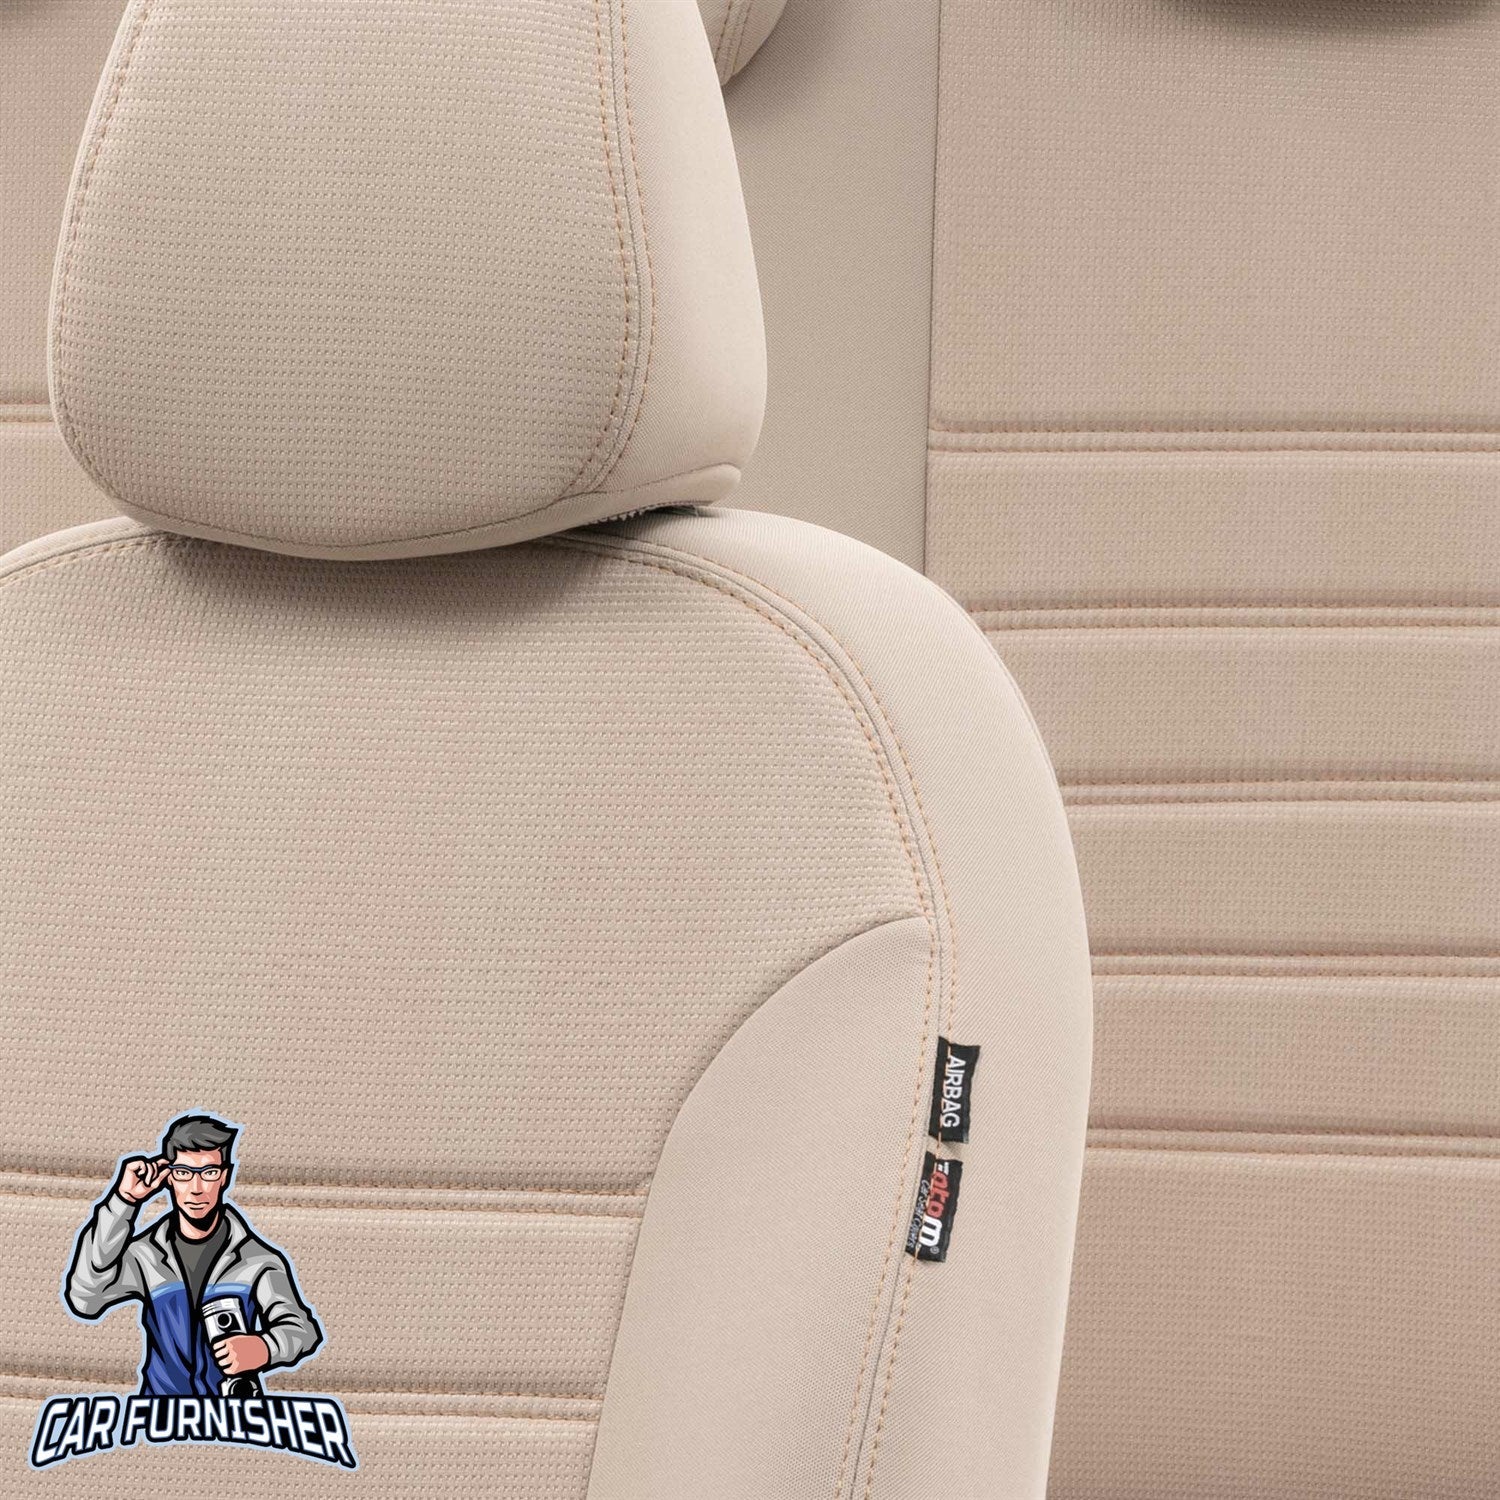 Mini Cooper Seat Covers Original Jacquard Design Beige Jacquard Fabric